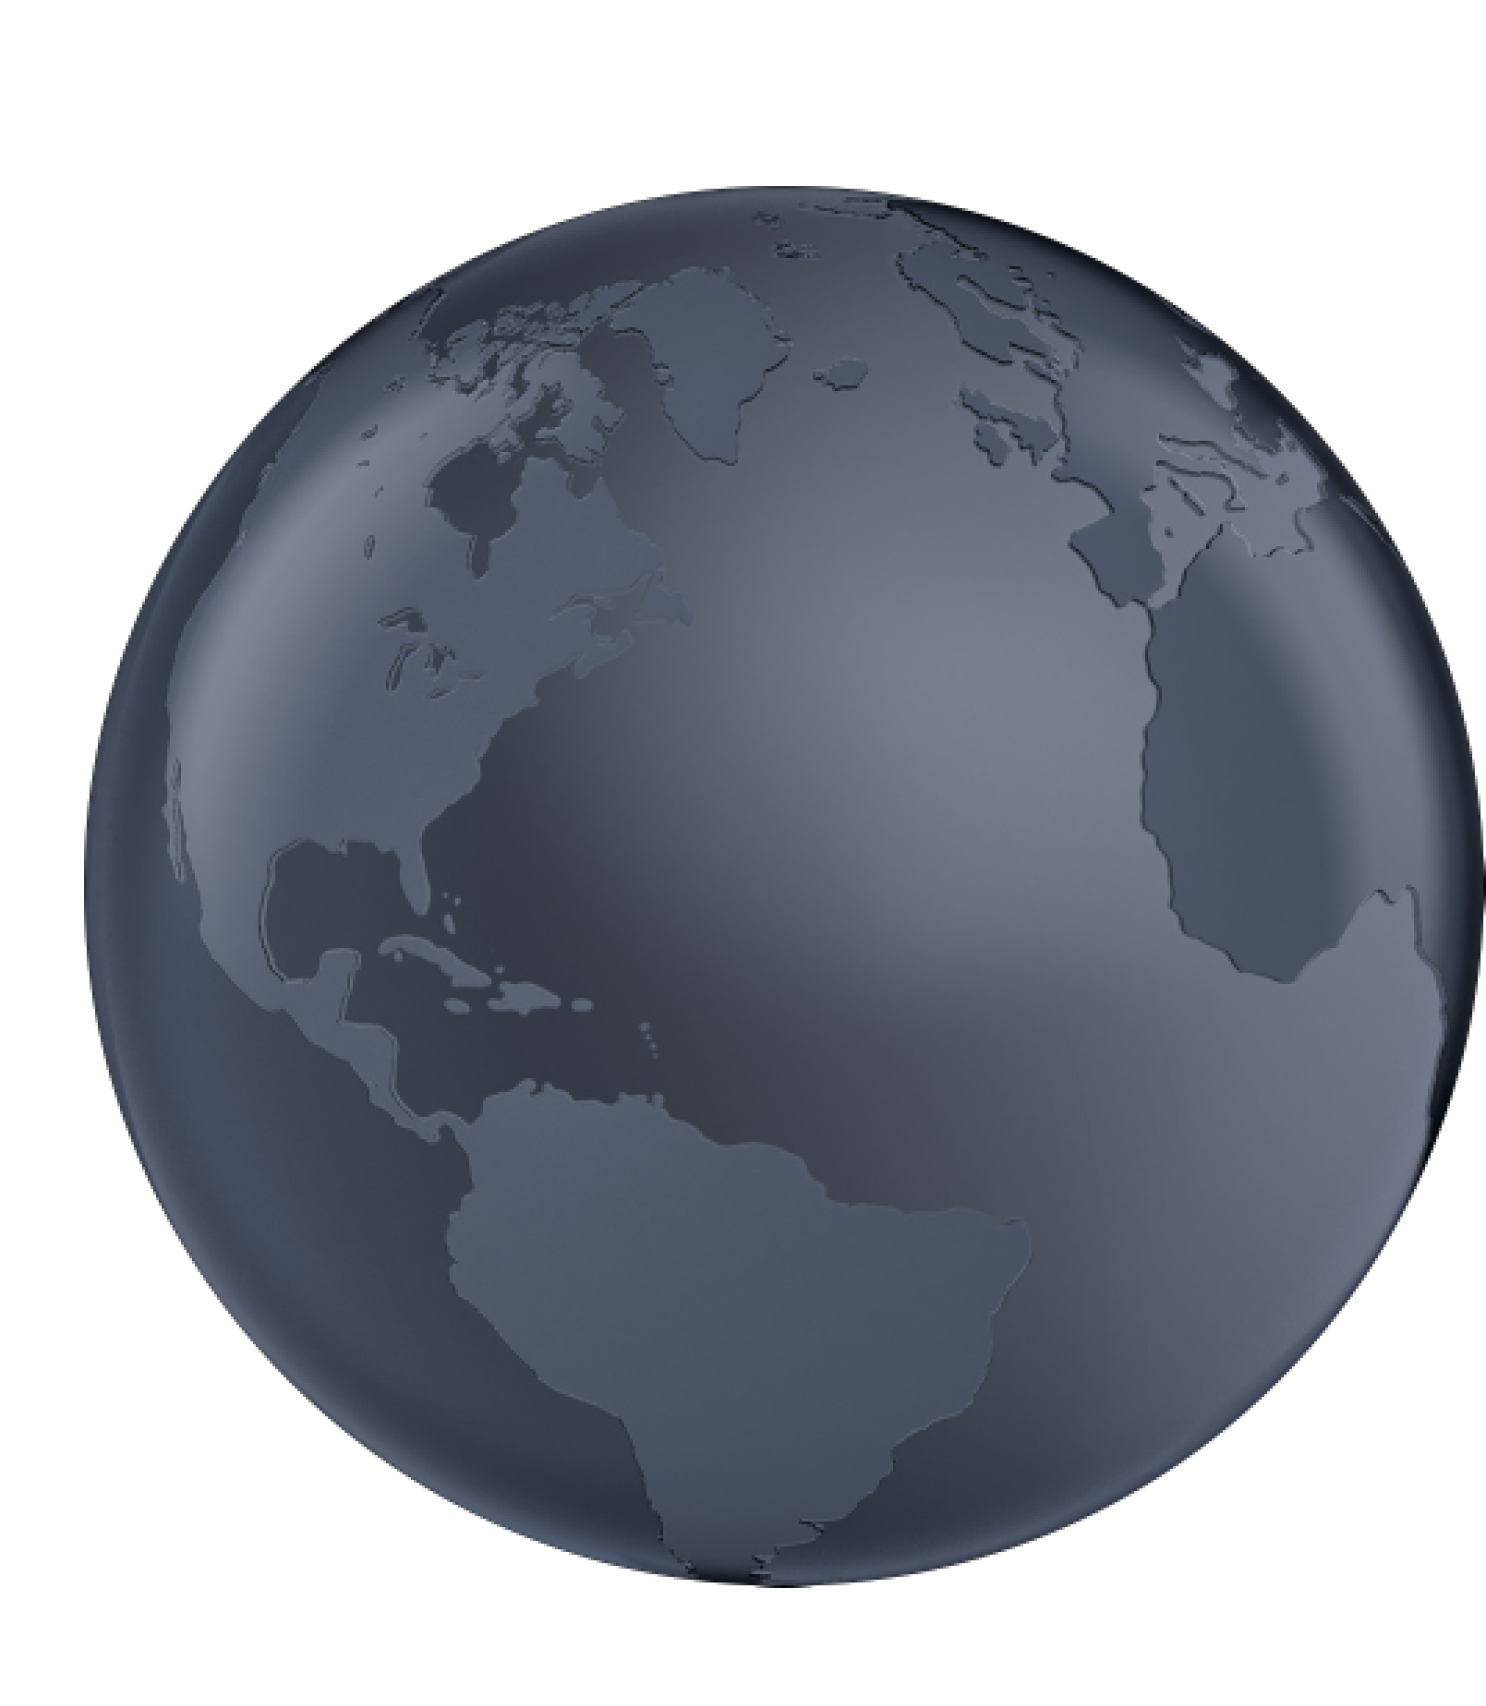 Globe with internet traffic visualised